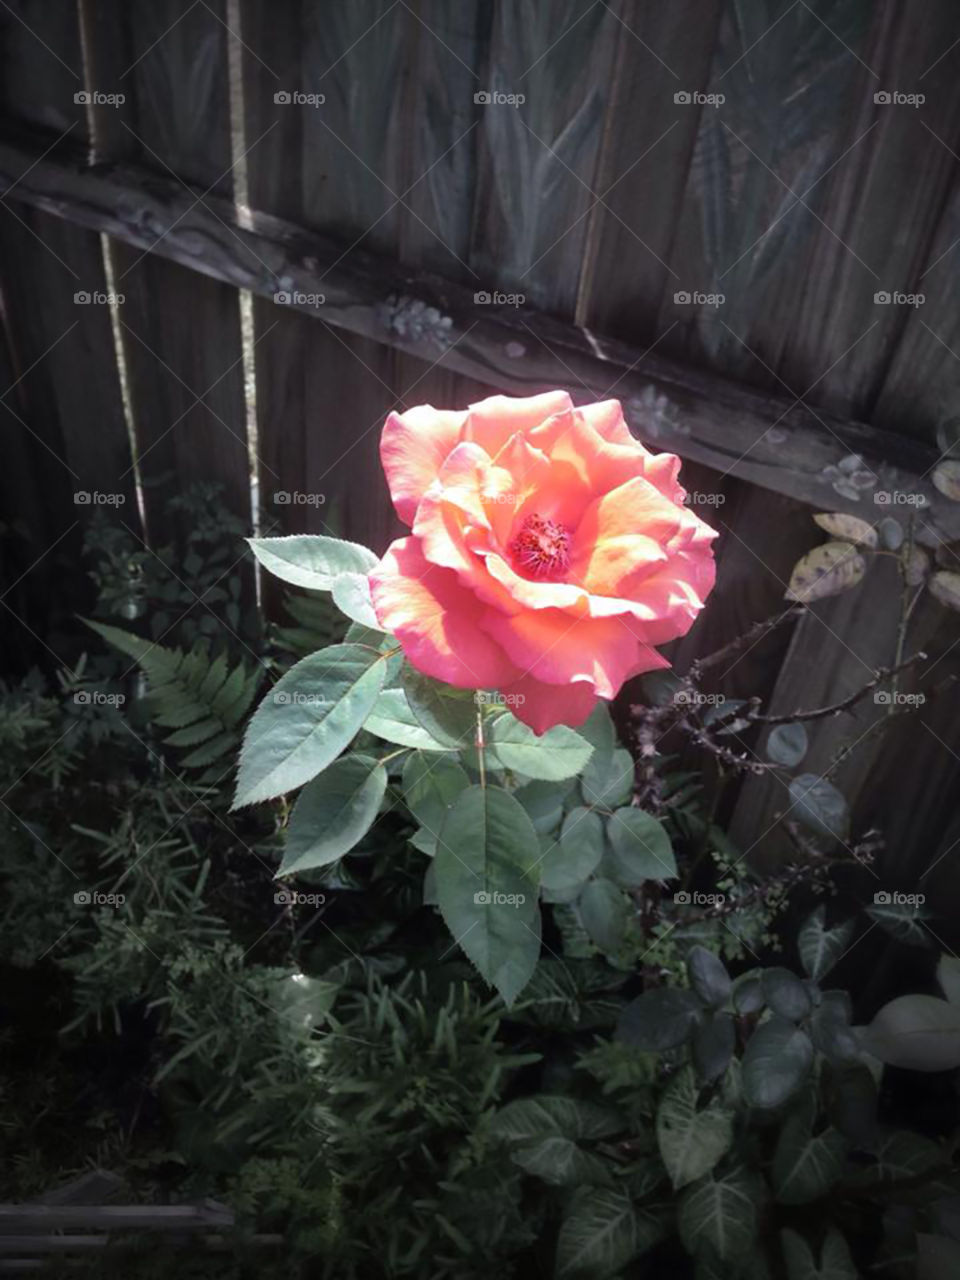 Rose in back yard near fence. Full bloom, pink. Edited 